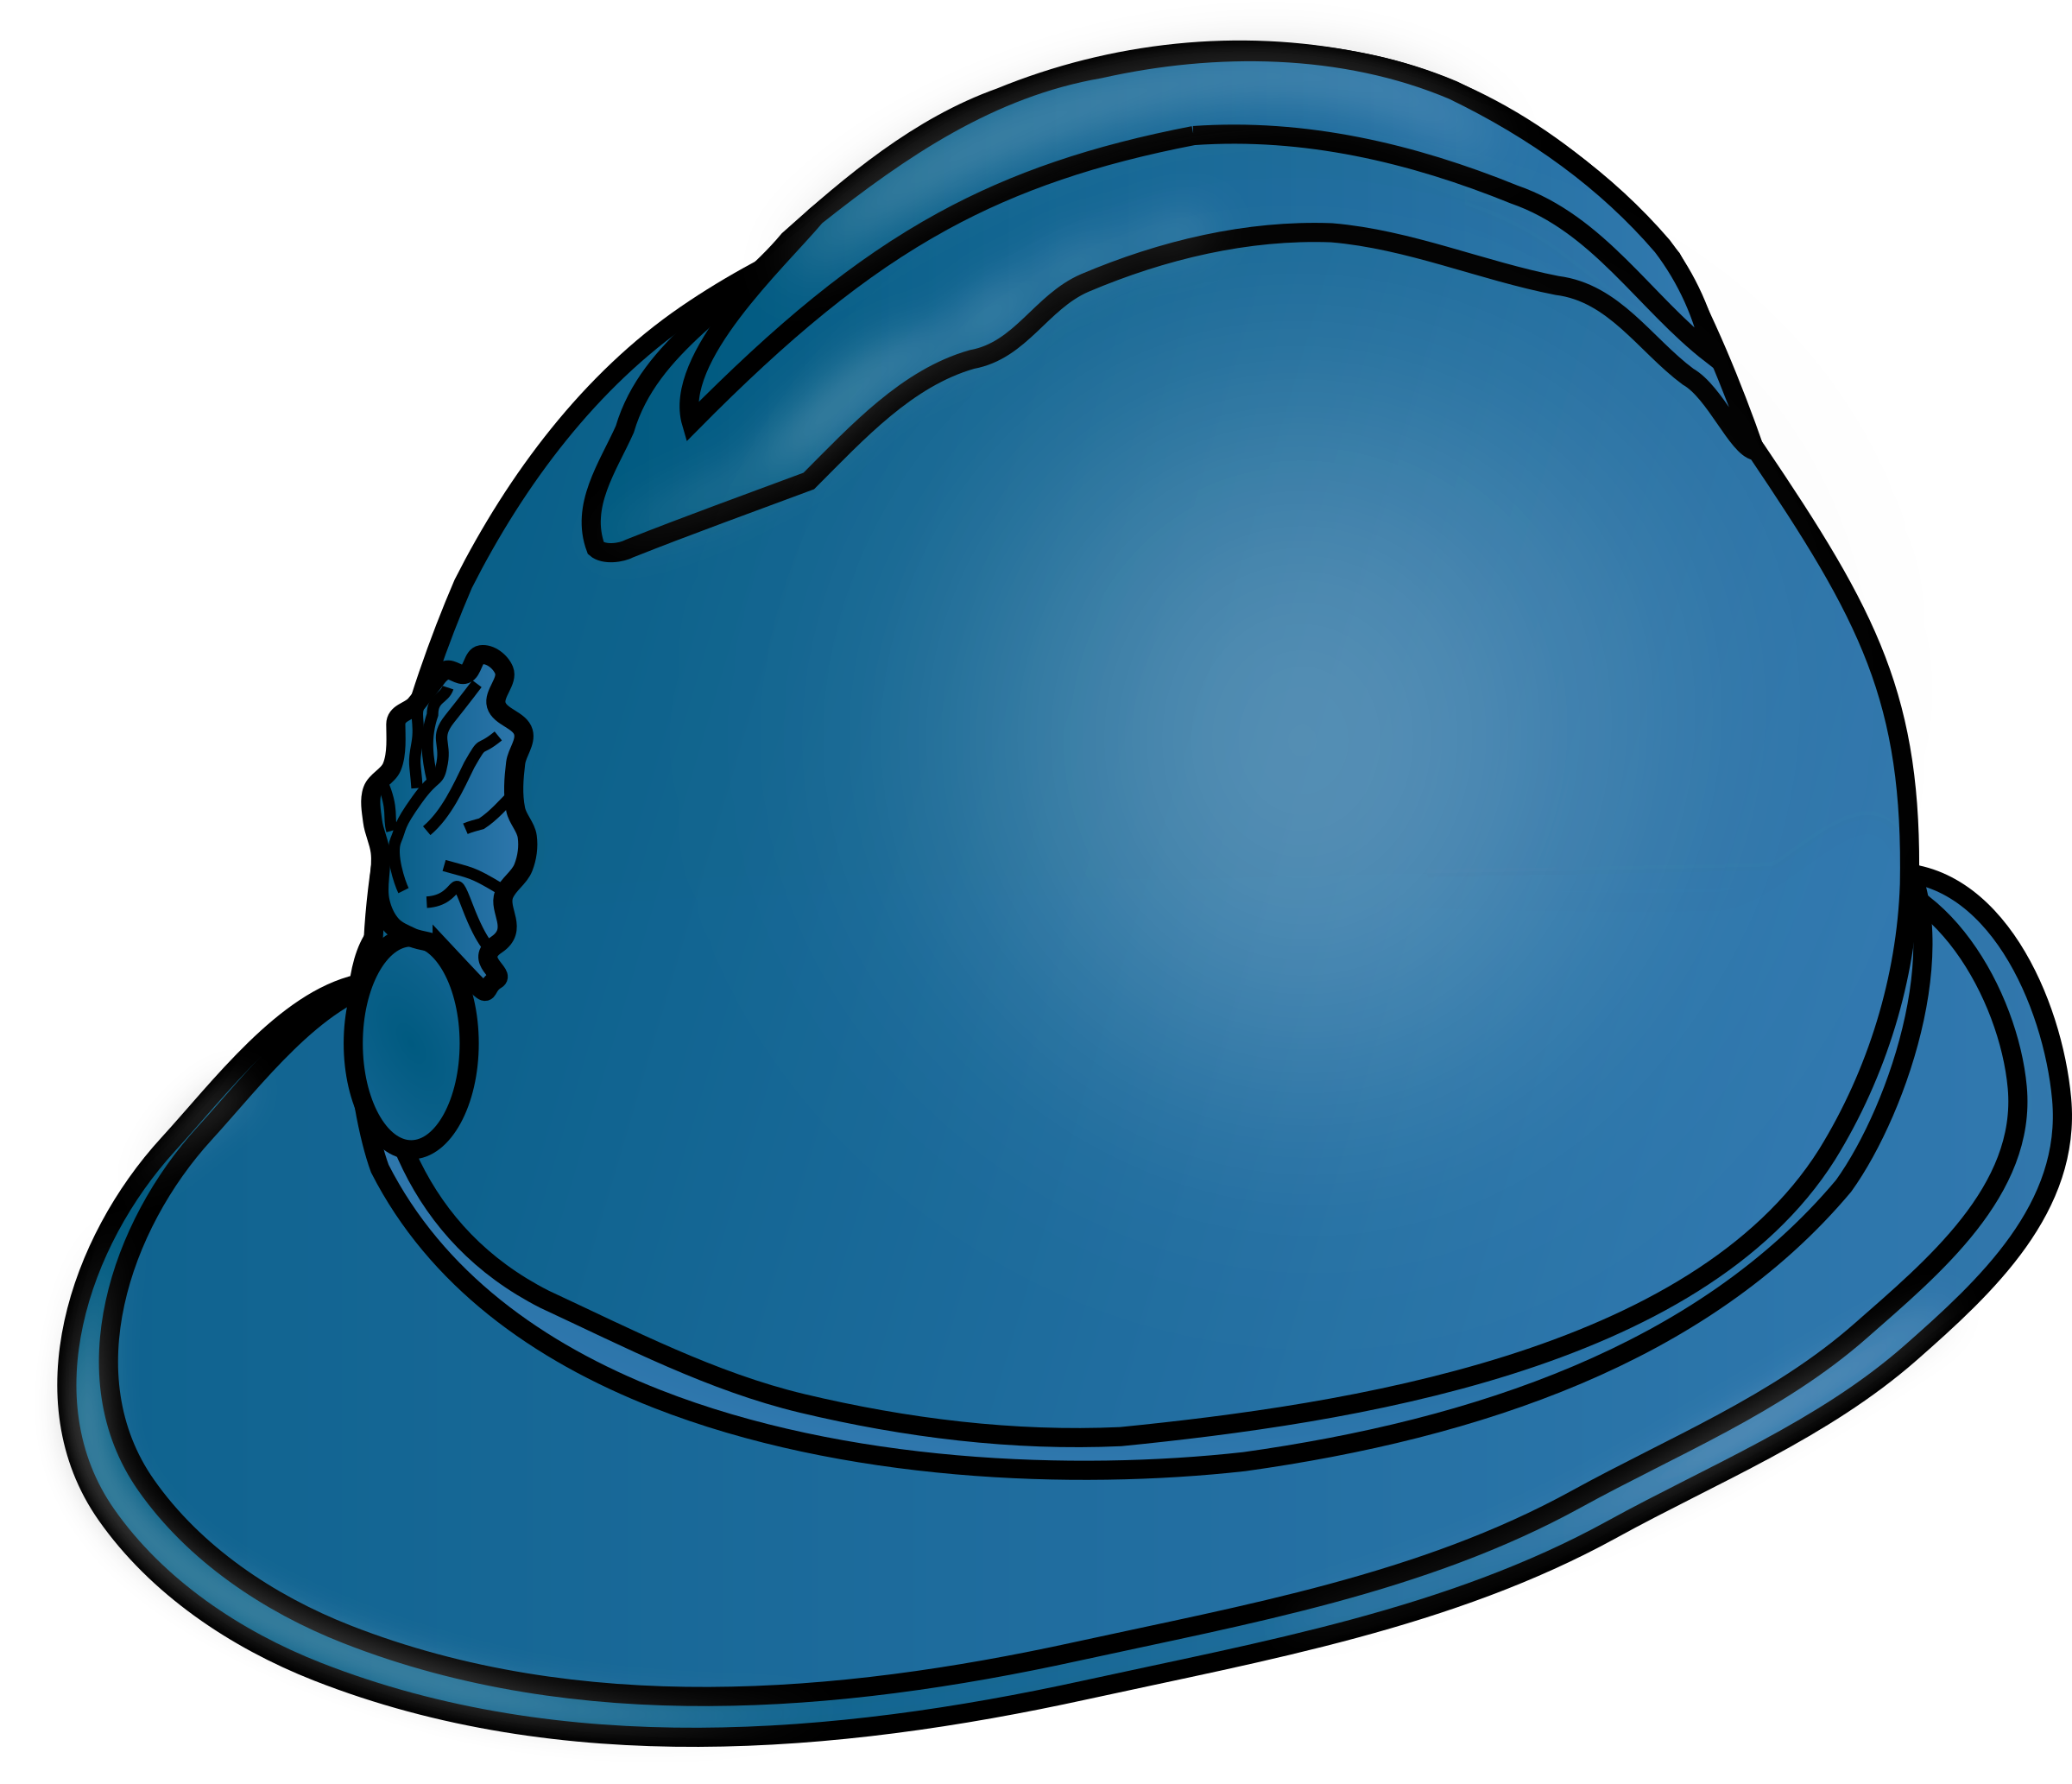 helmet clipart blue